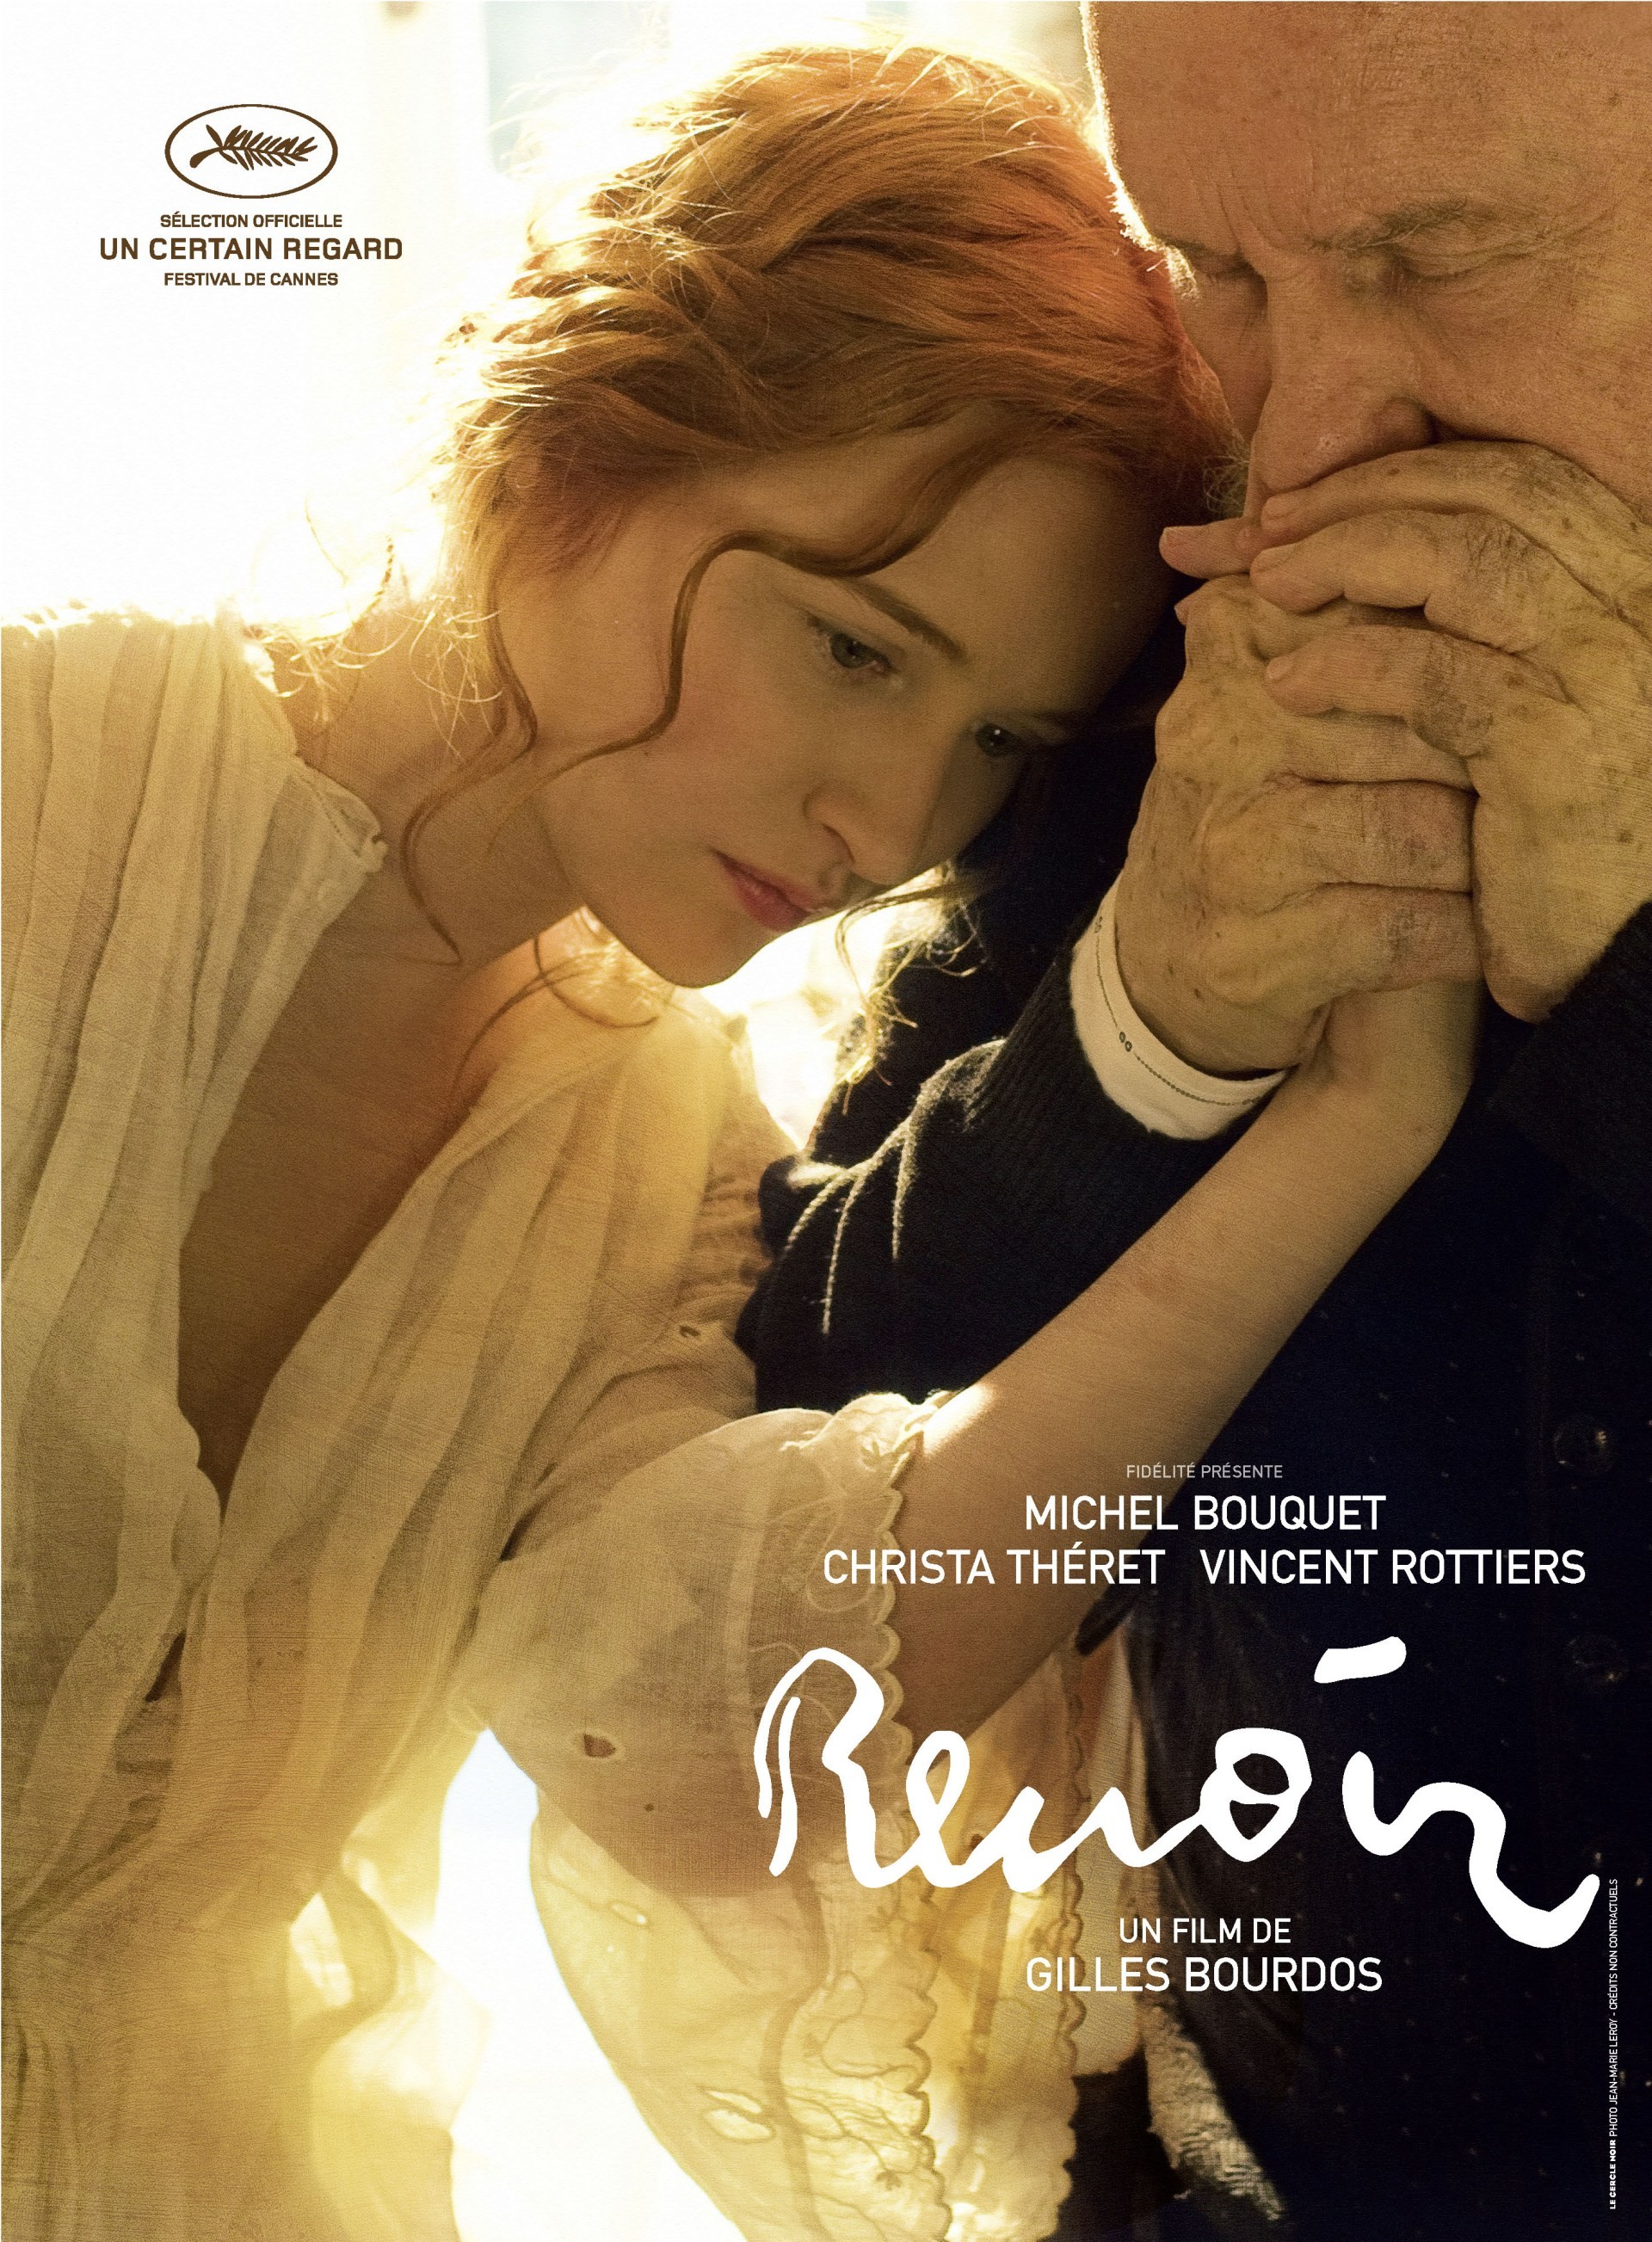 Mega Sized Movie Poster Image for Renoir (#4 of 7)